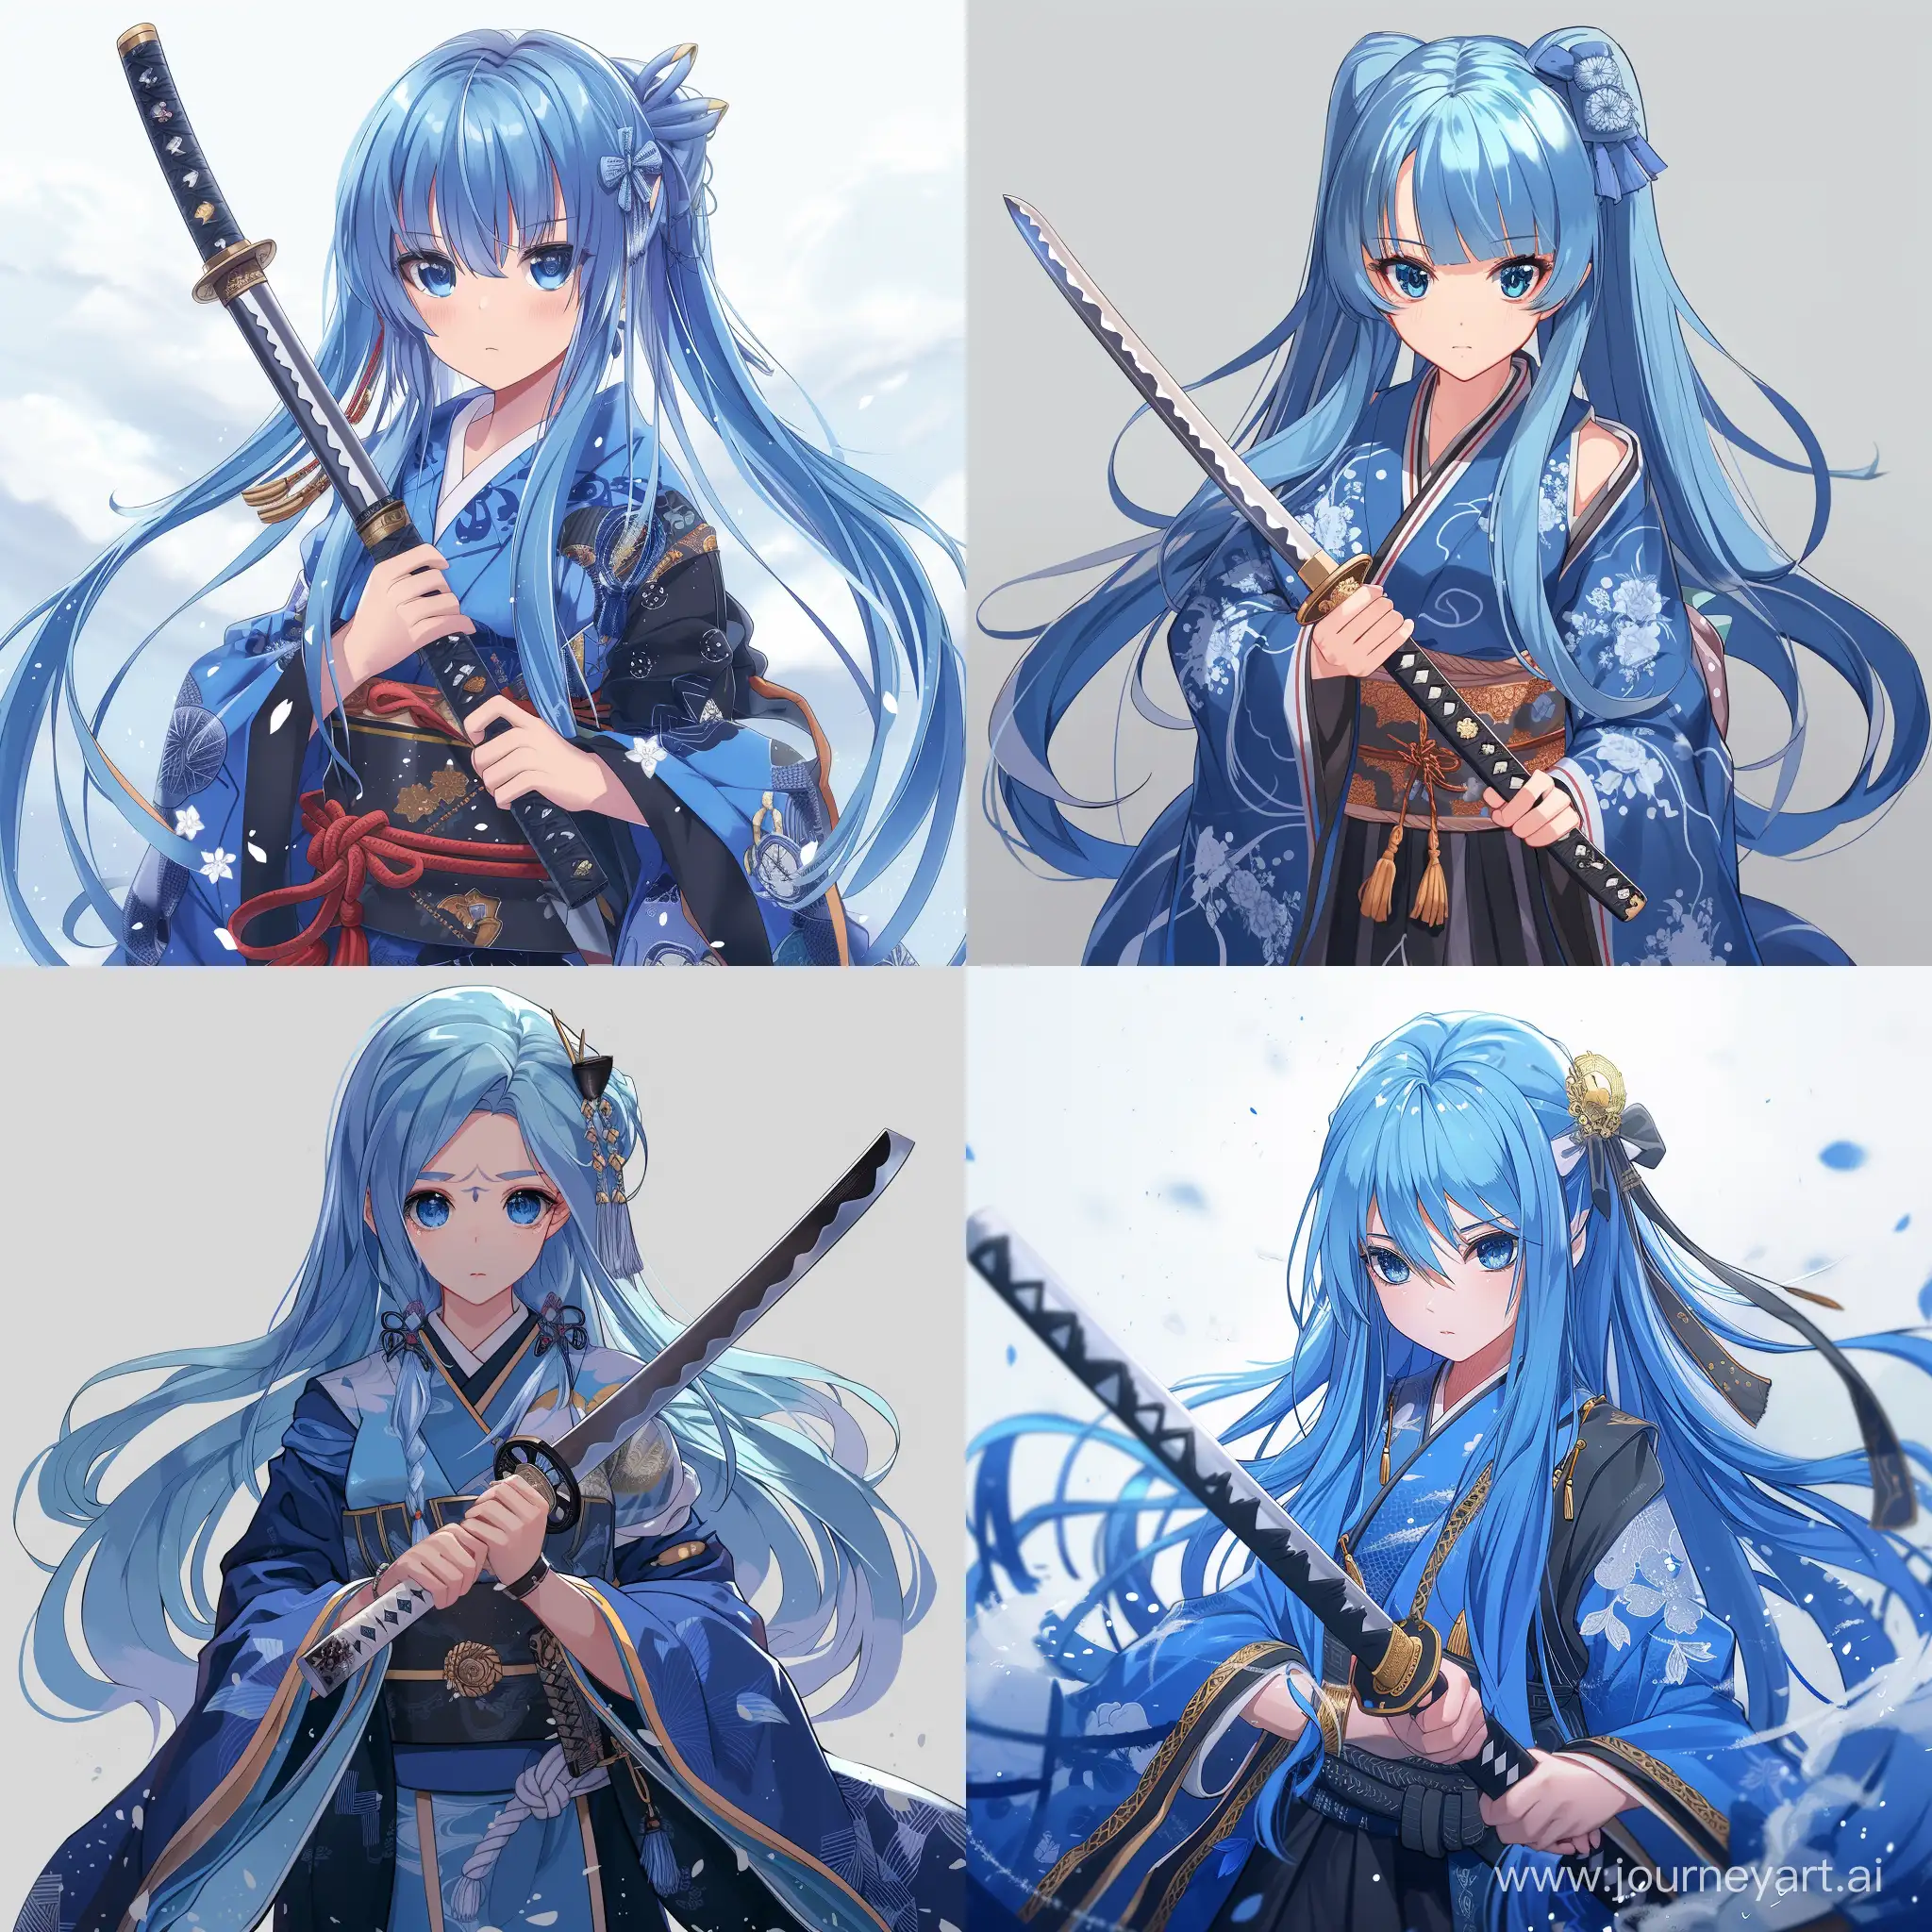 Graceful-Warrior-with-Long-Blue-Hair-Wielding-Japanese-Katana